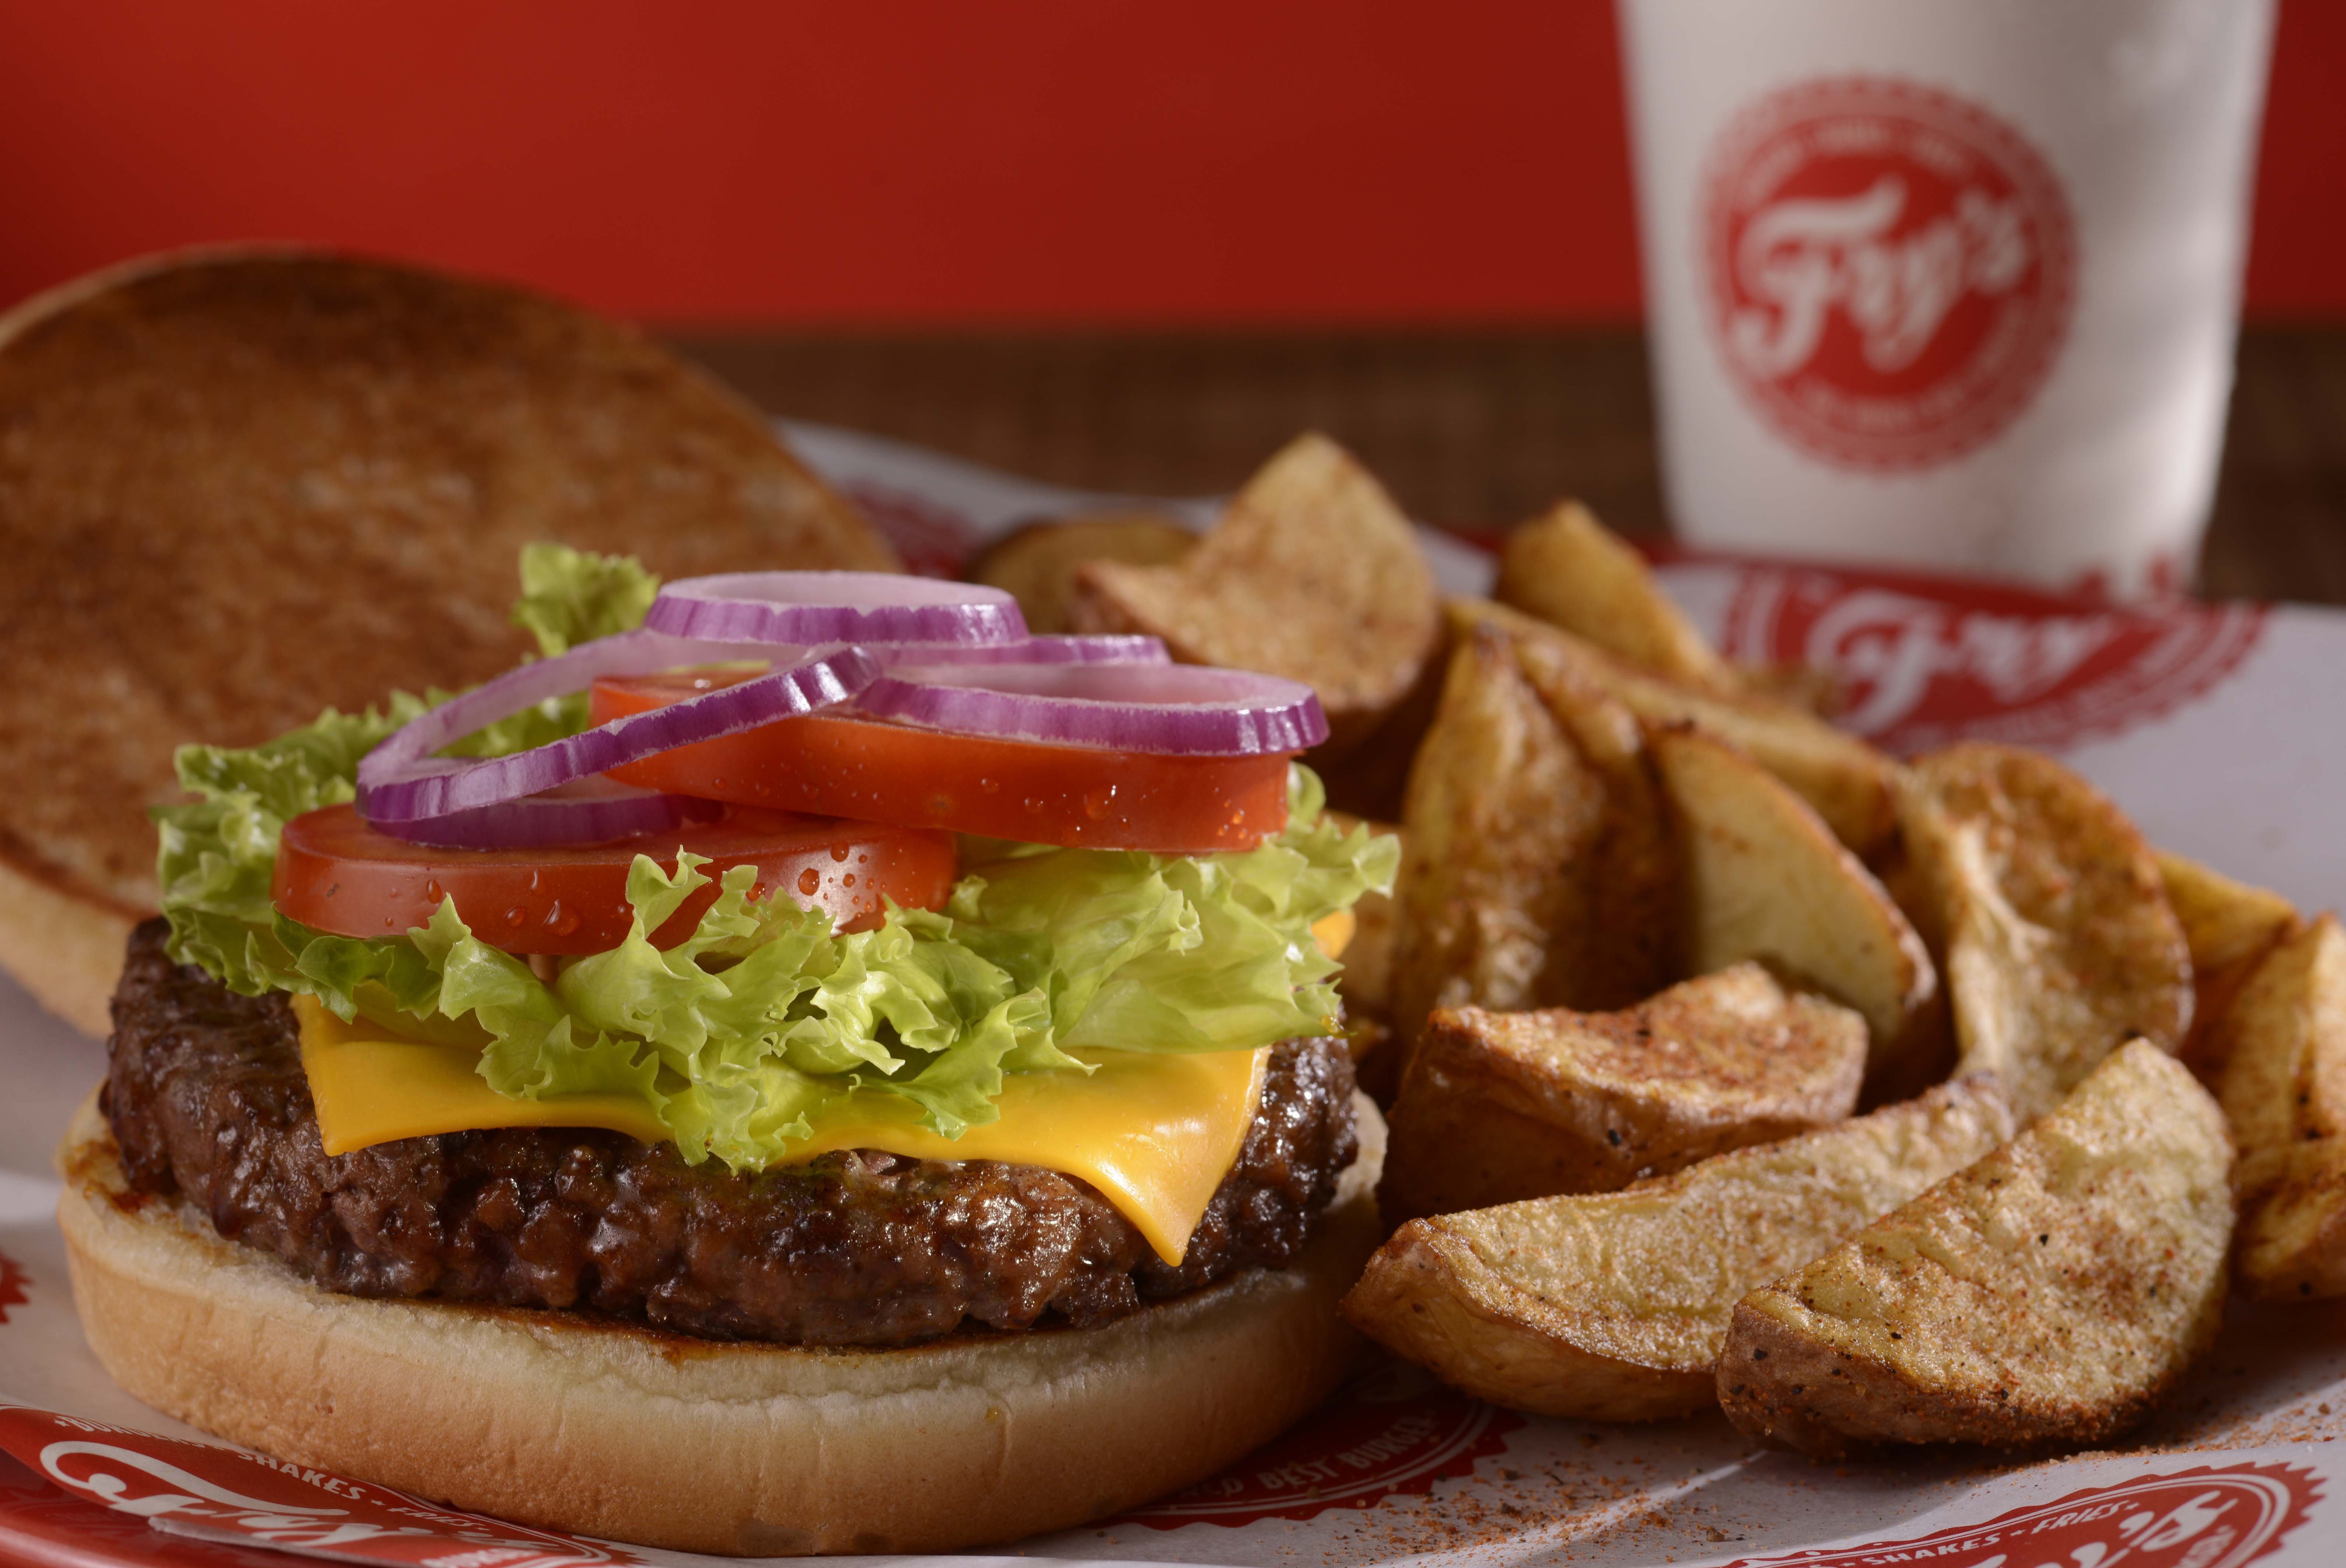 Restaurantes: Fry's Burger inaugura unidade no Barra Shopping